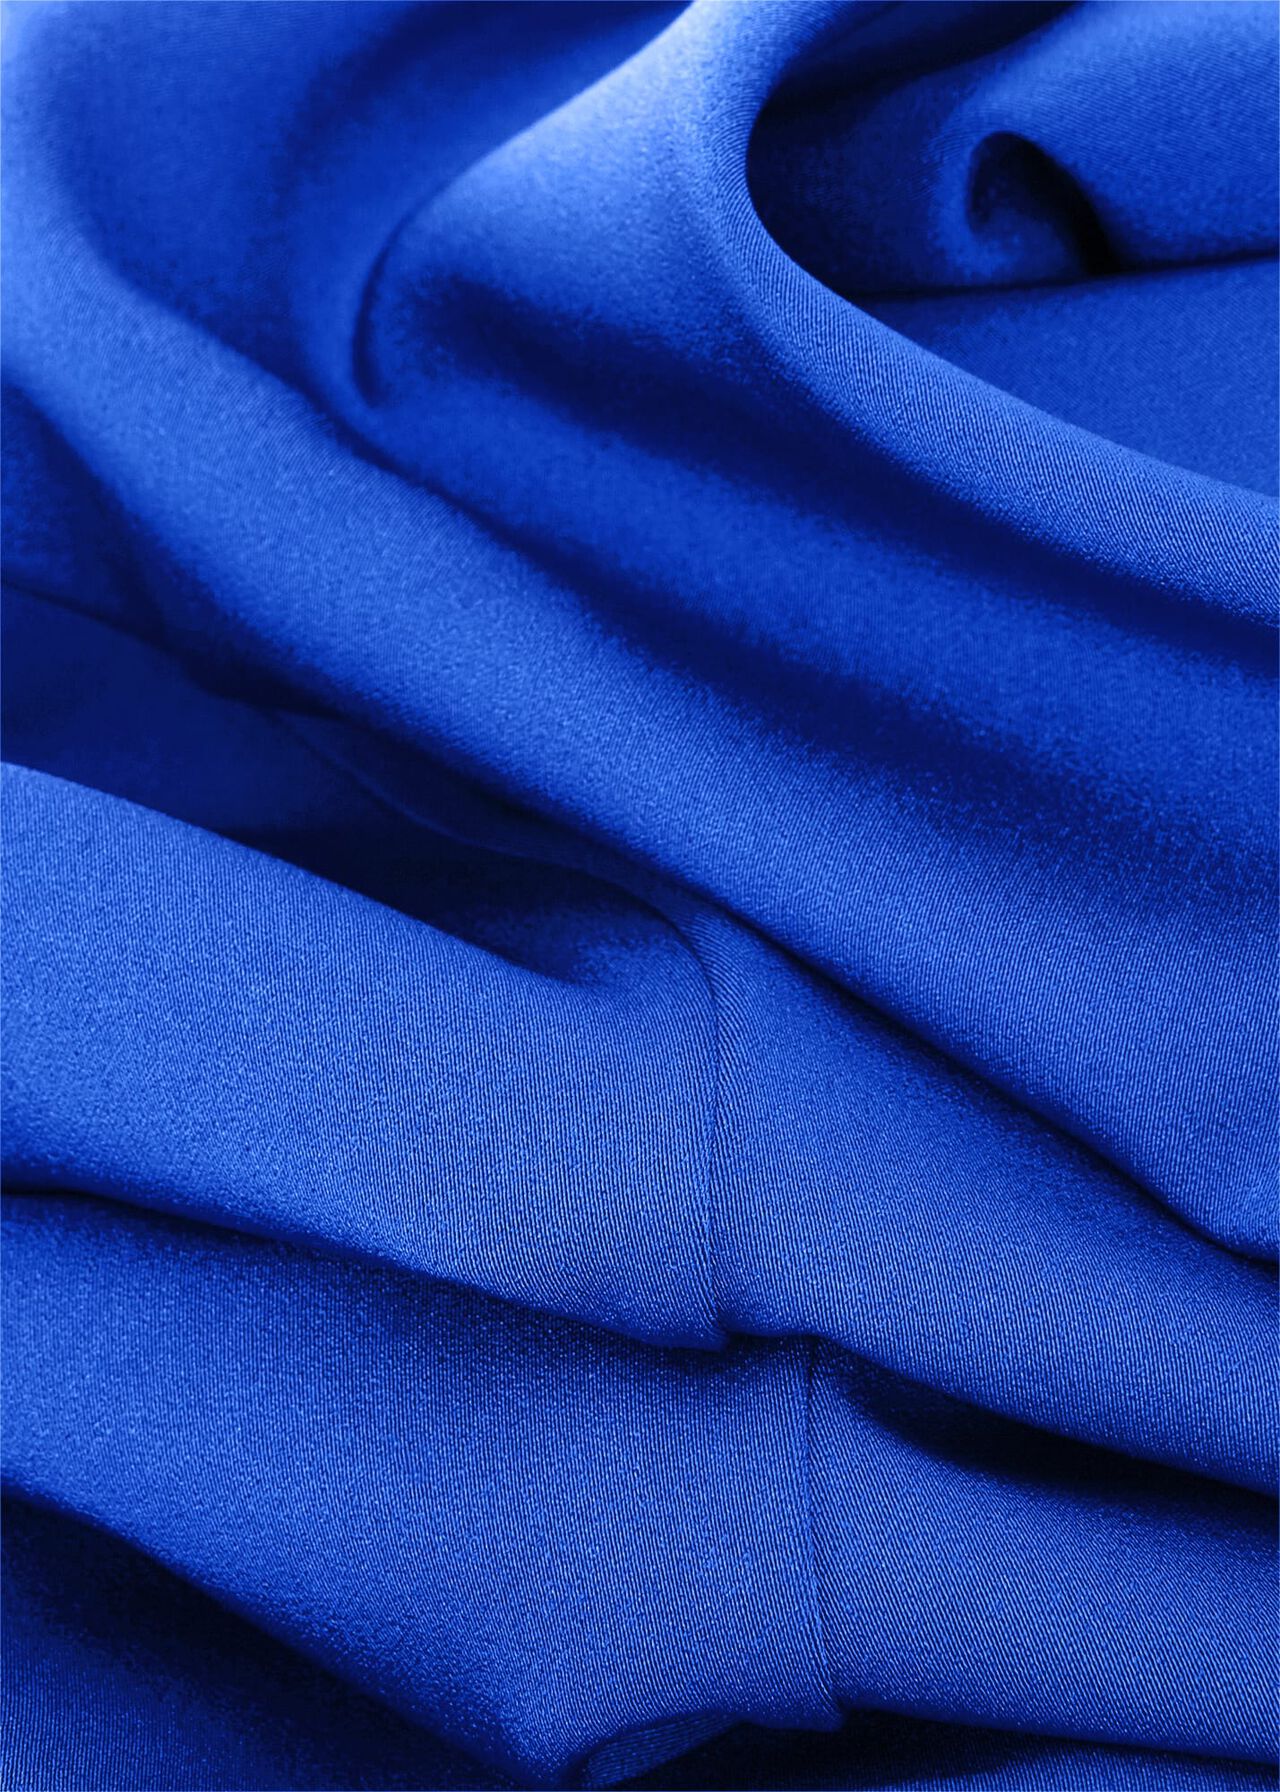 Palmer Midi Fit And Flare Dress, Mazarine Blue, hi-res